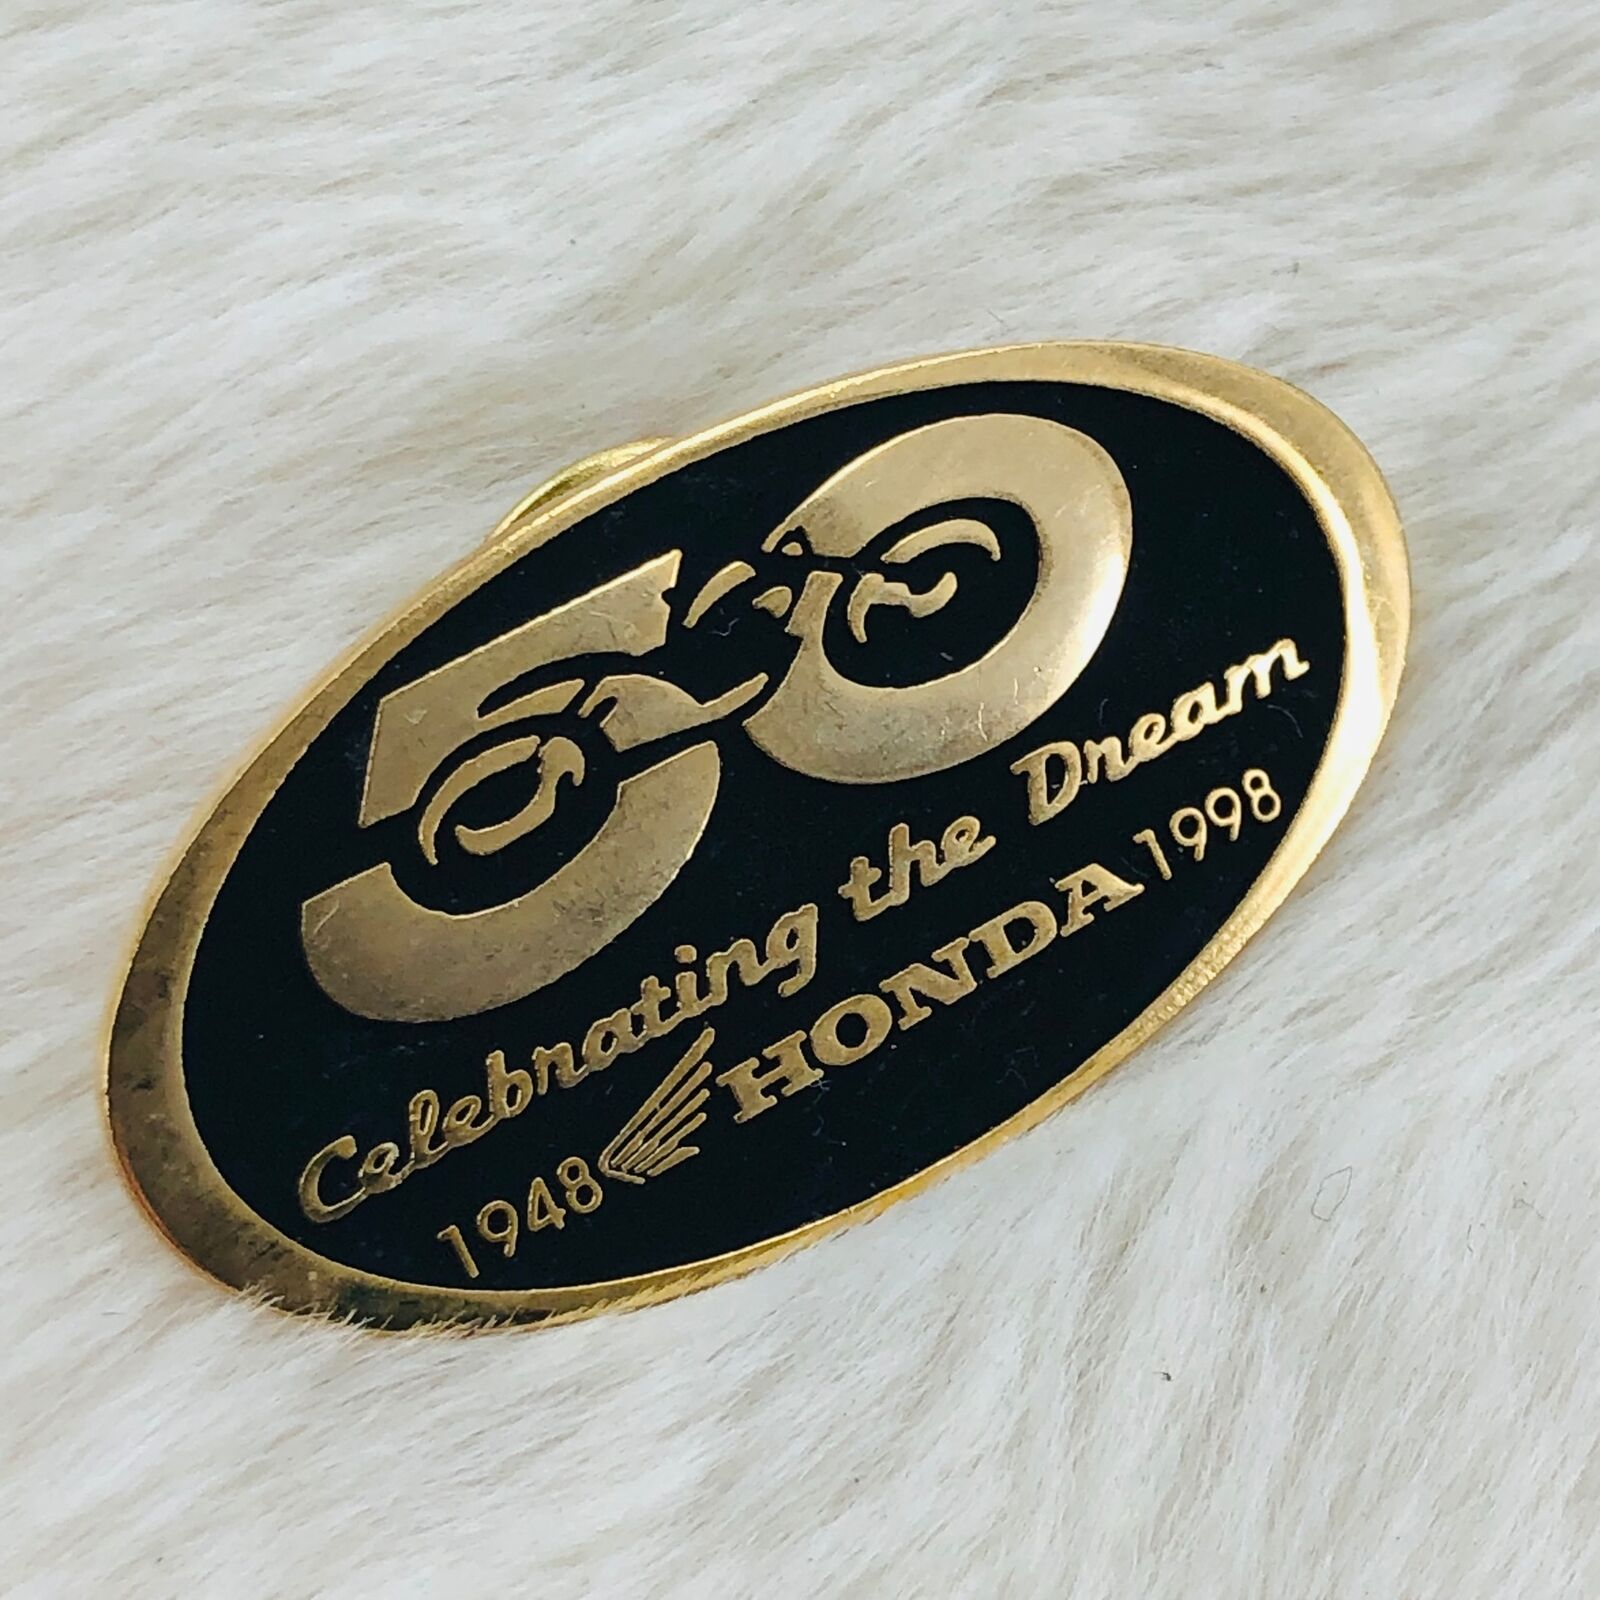 1998 Honda Goldwing Motorcycle 50th Anniversary Enamel Lapel Pin